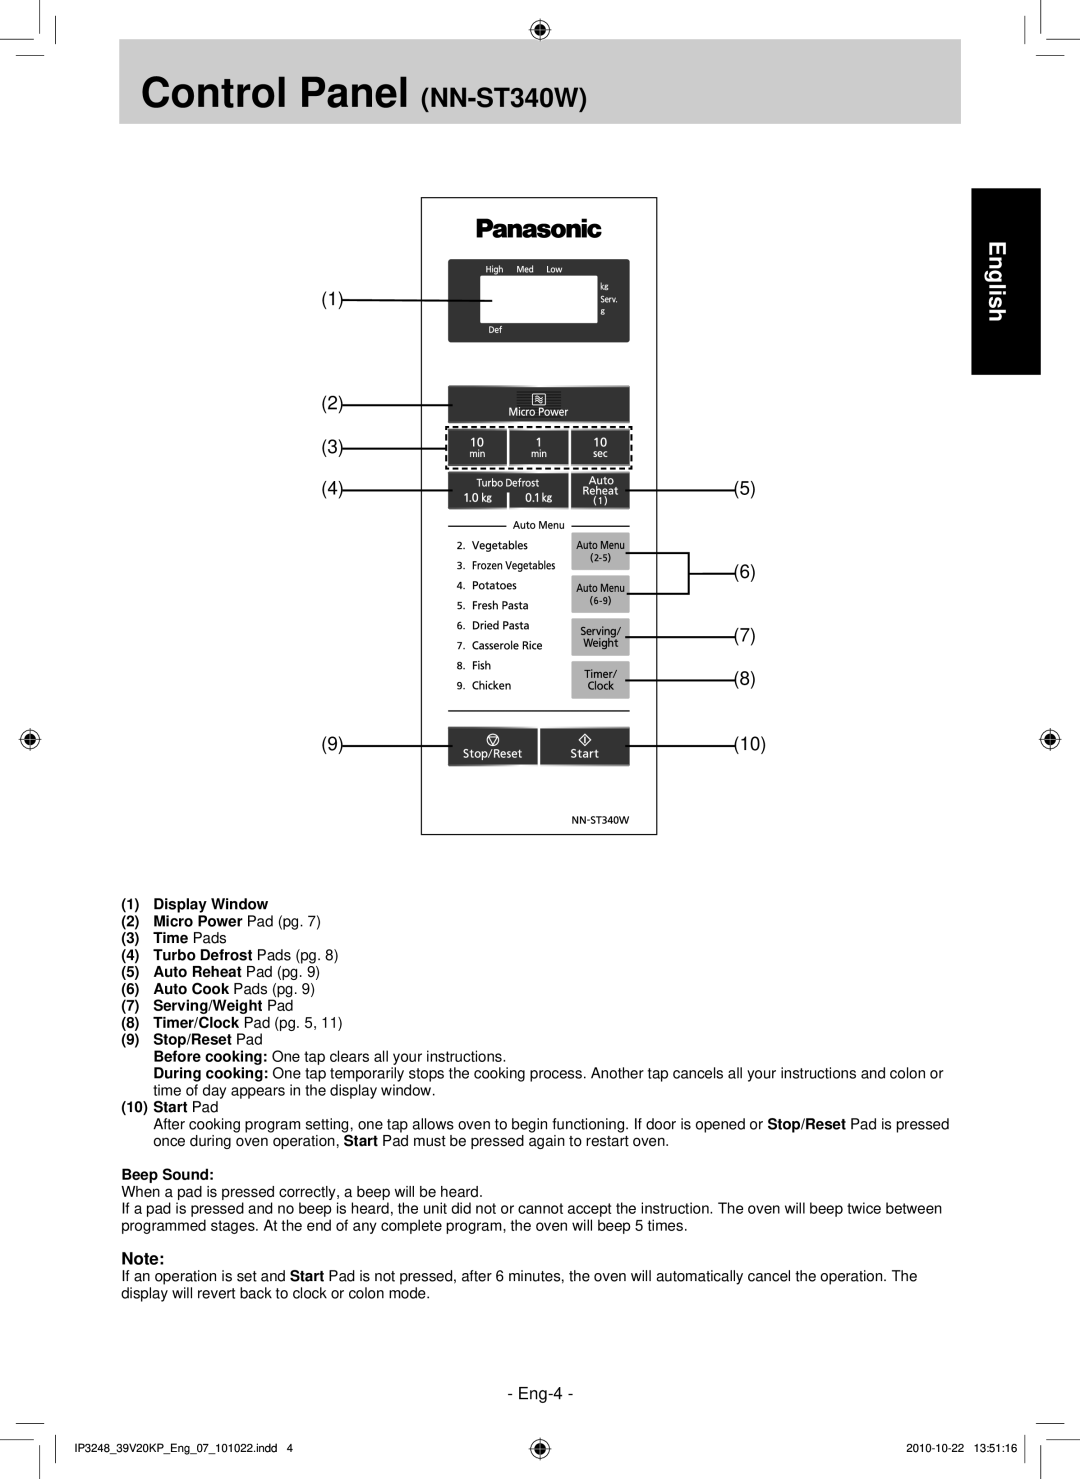 Panasonic NN-SM330W operating instructions Control Panel NN-ST340W, English, Eng-4 